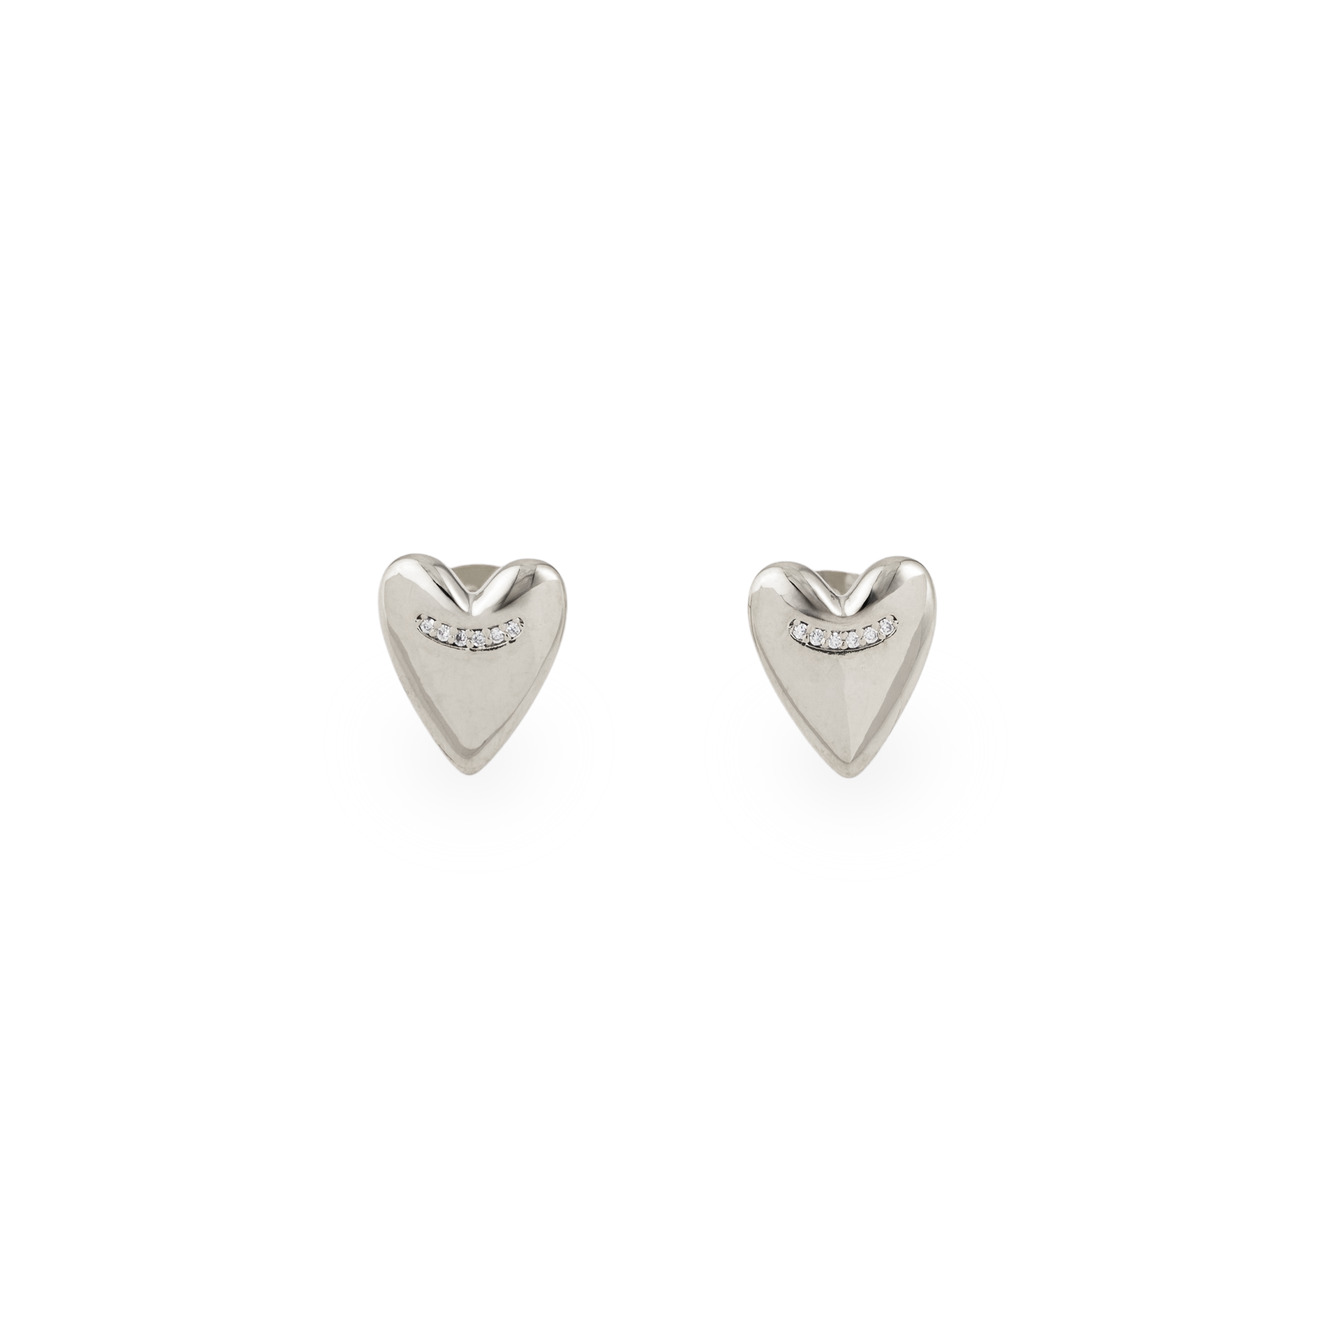 серьги сердца veruschka jewelry из мятого матового металла Free Form Jewelry Серебристые серьги-сердца с маленькими кристаллами